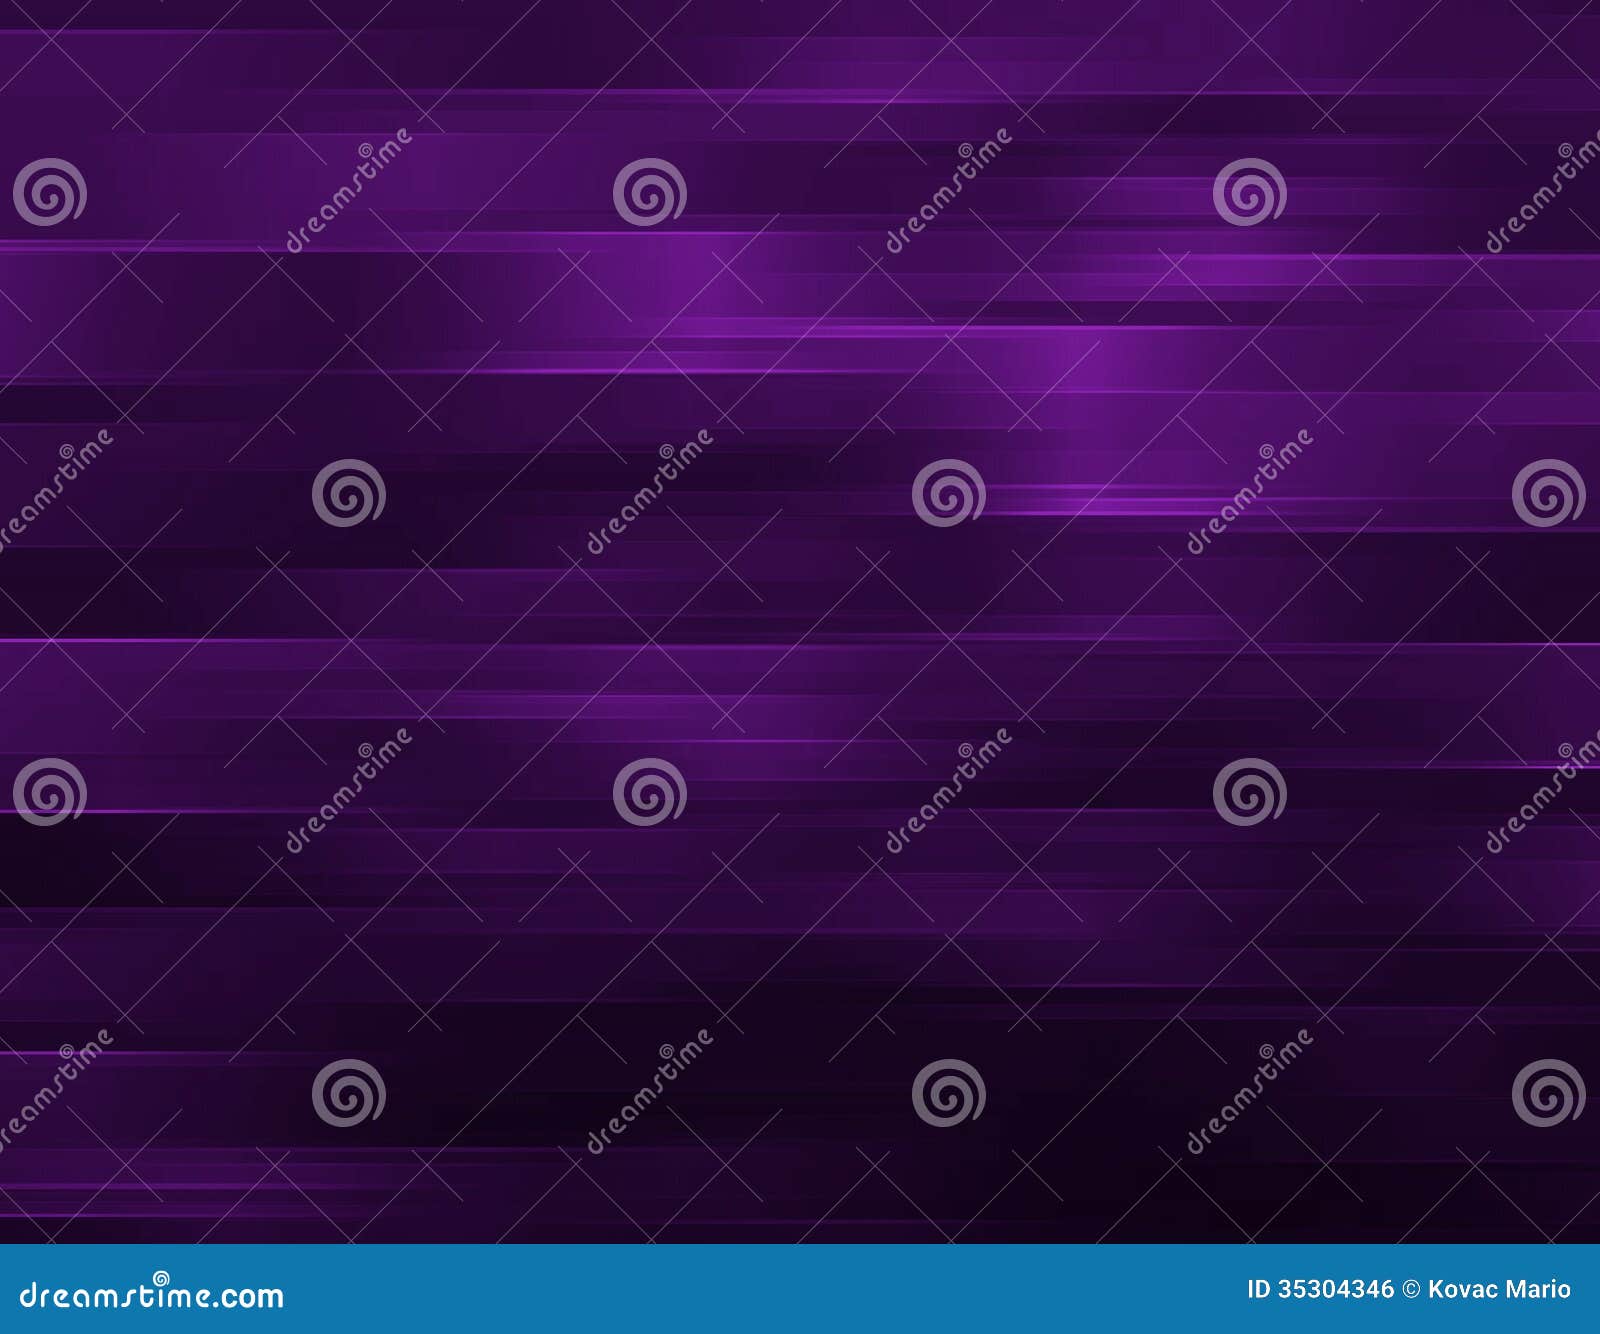 purple abstarct background